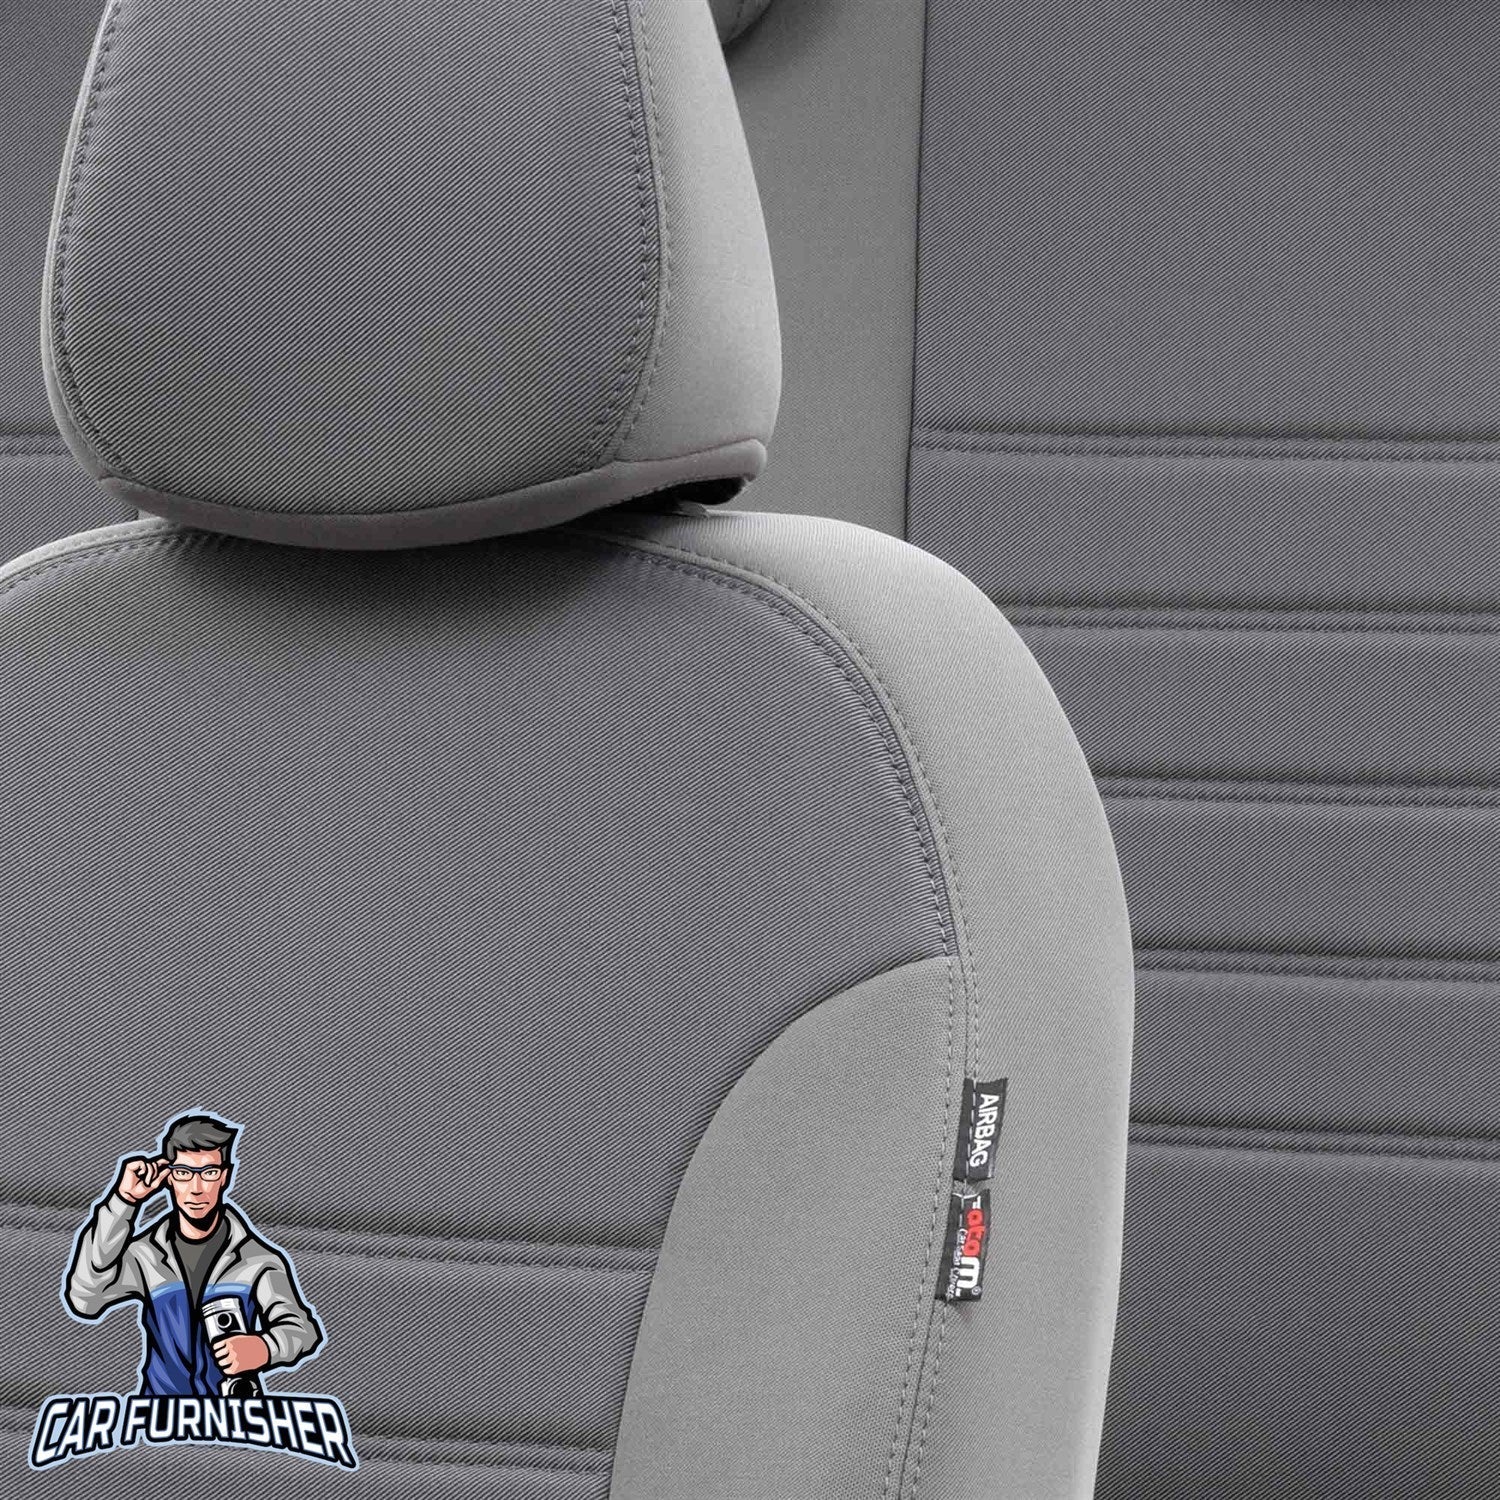 Fiat 500 Seat Covers Original Jacquard Design Gray Jacquard Fabric